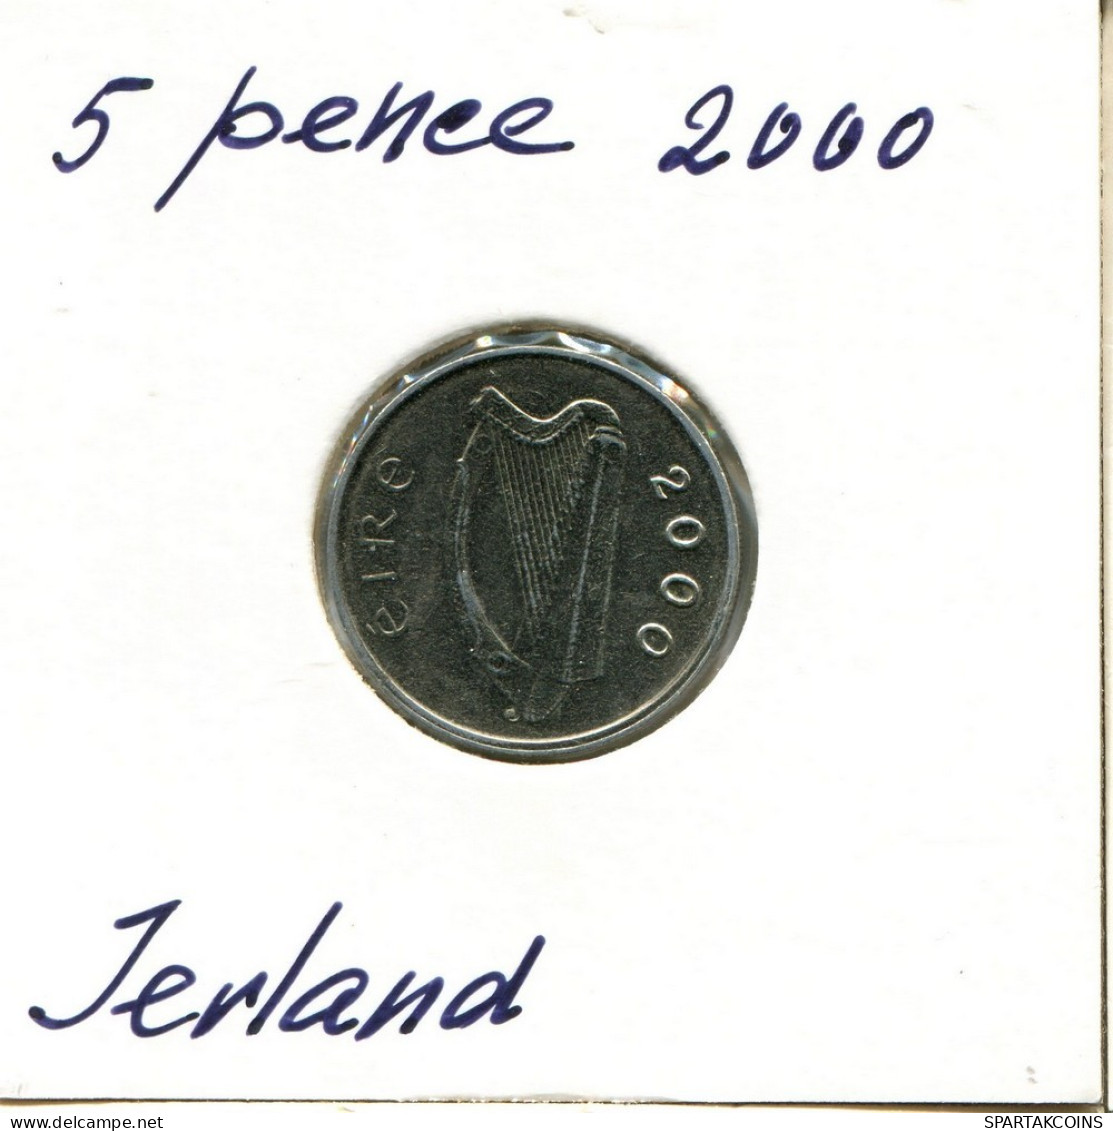 5 PENCE 2000 IRLAND IRELAND Münze #AY687.D.A - Ierland